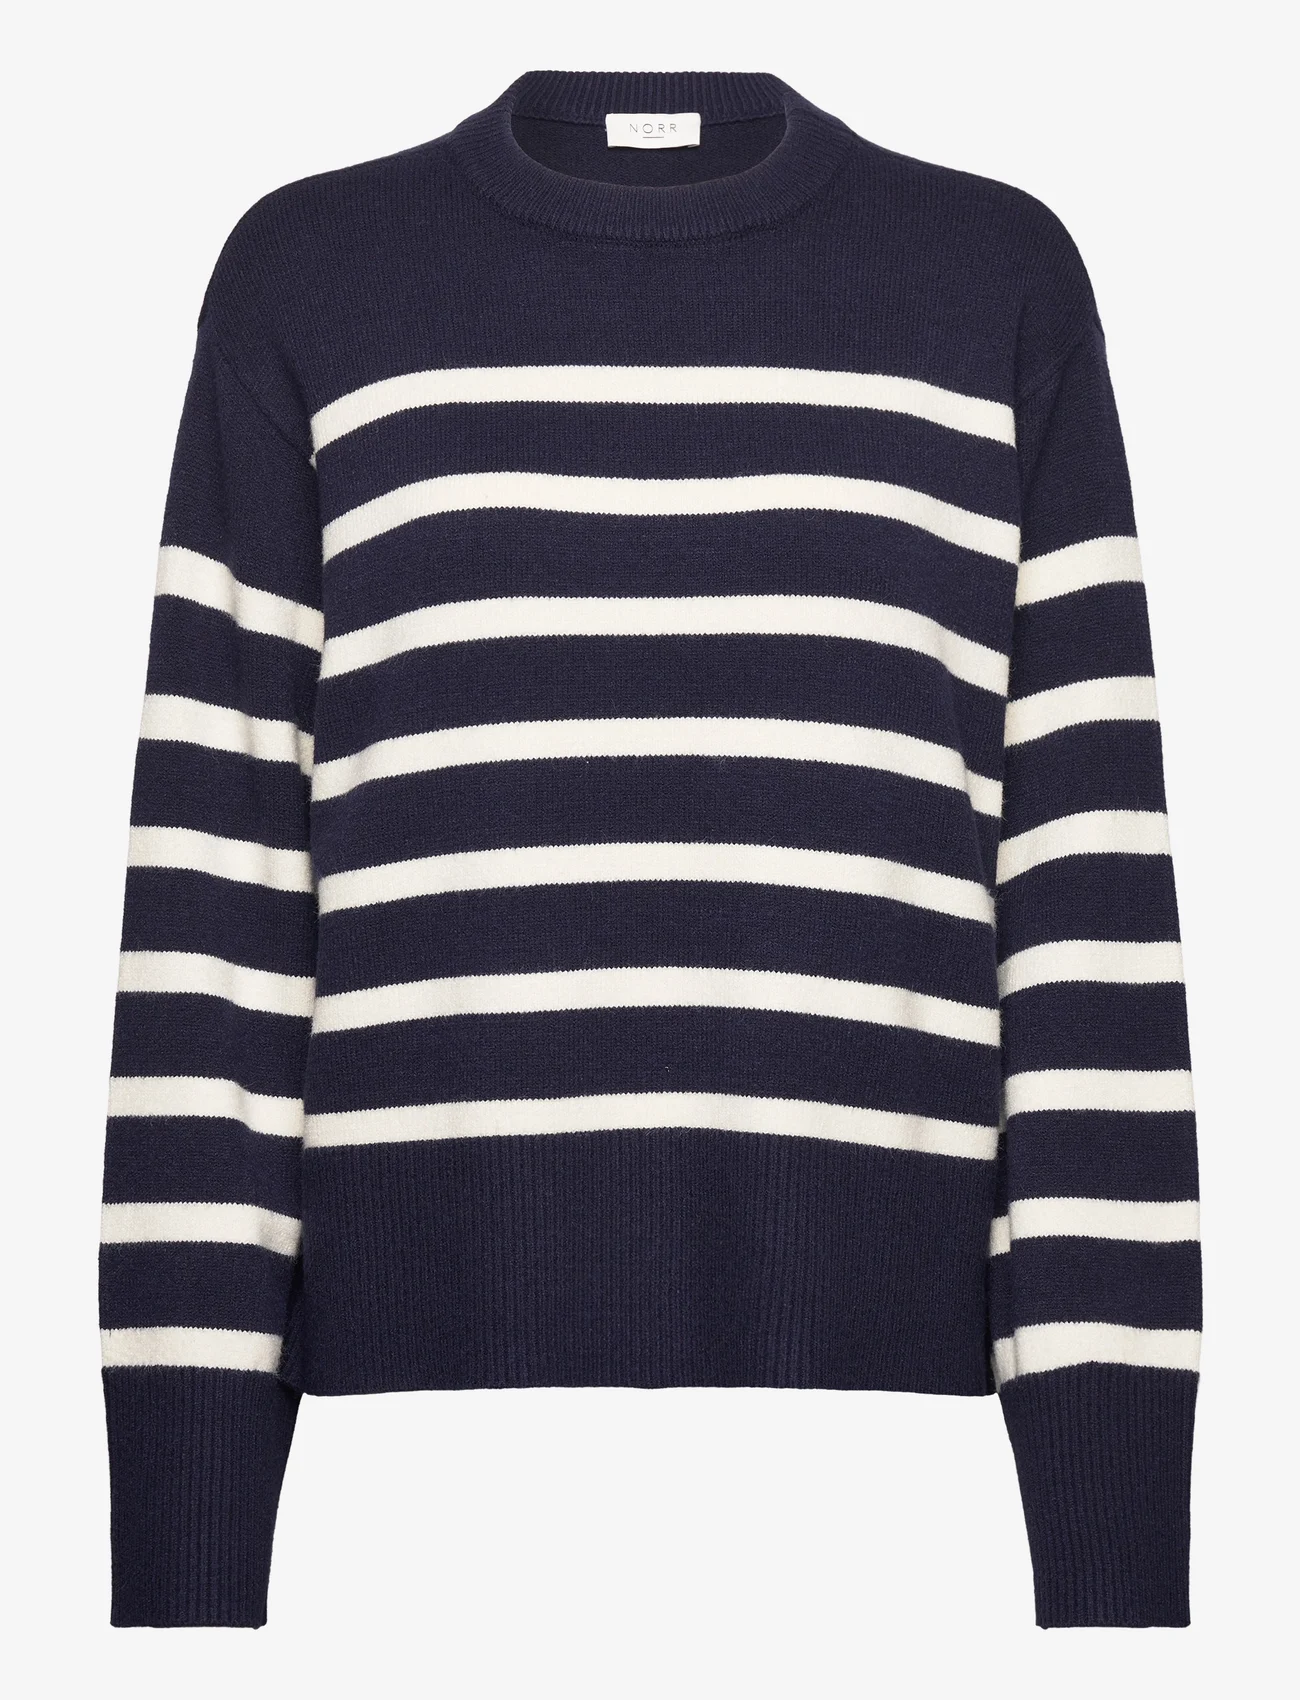 NORR - Lindsay new knit stripe top - džemperiai - navy comb - 0